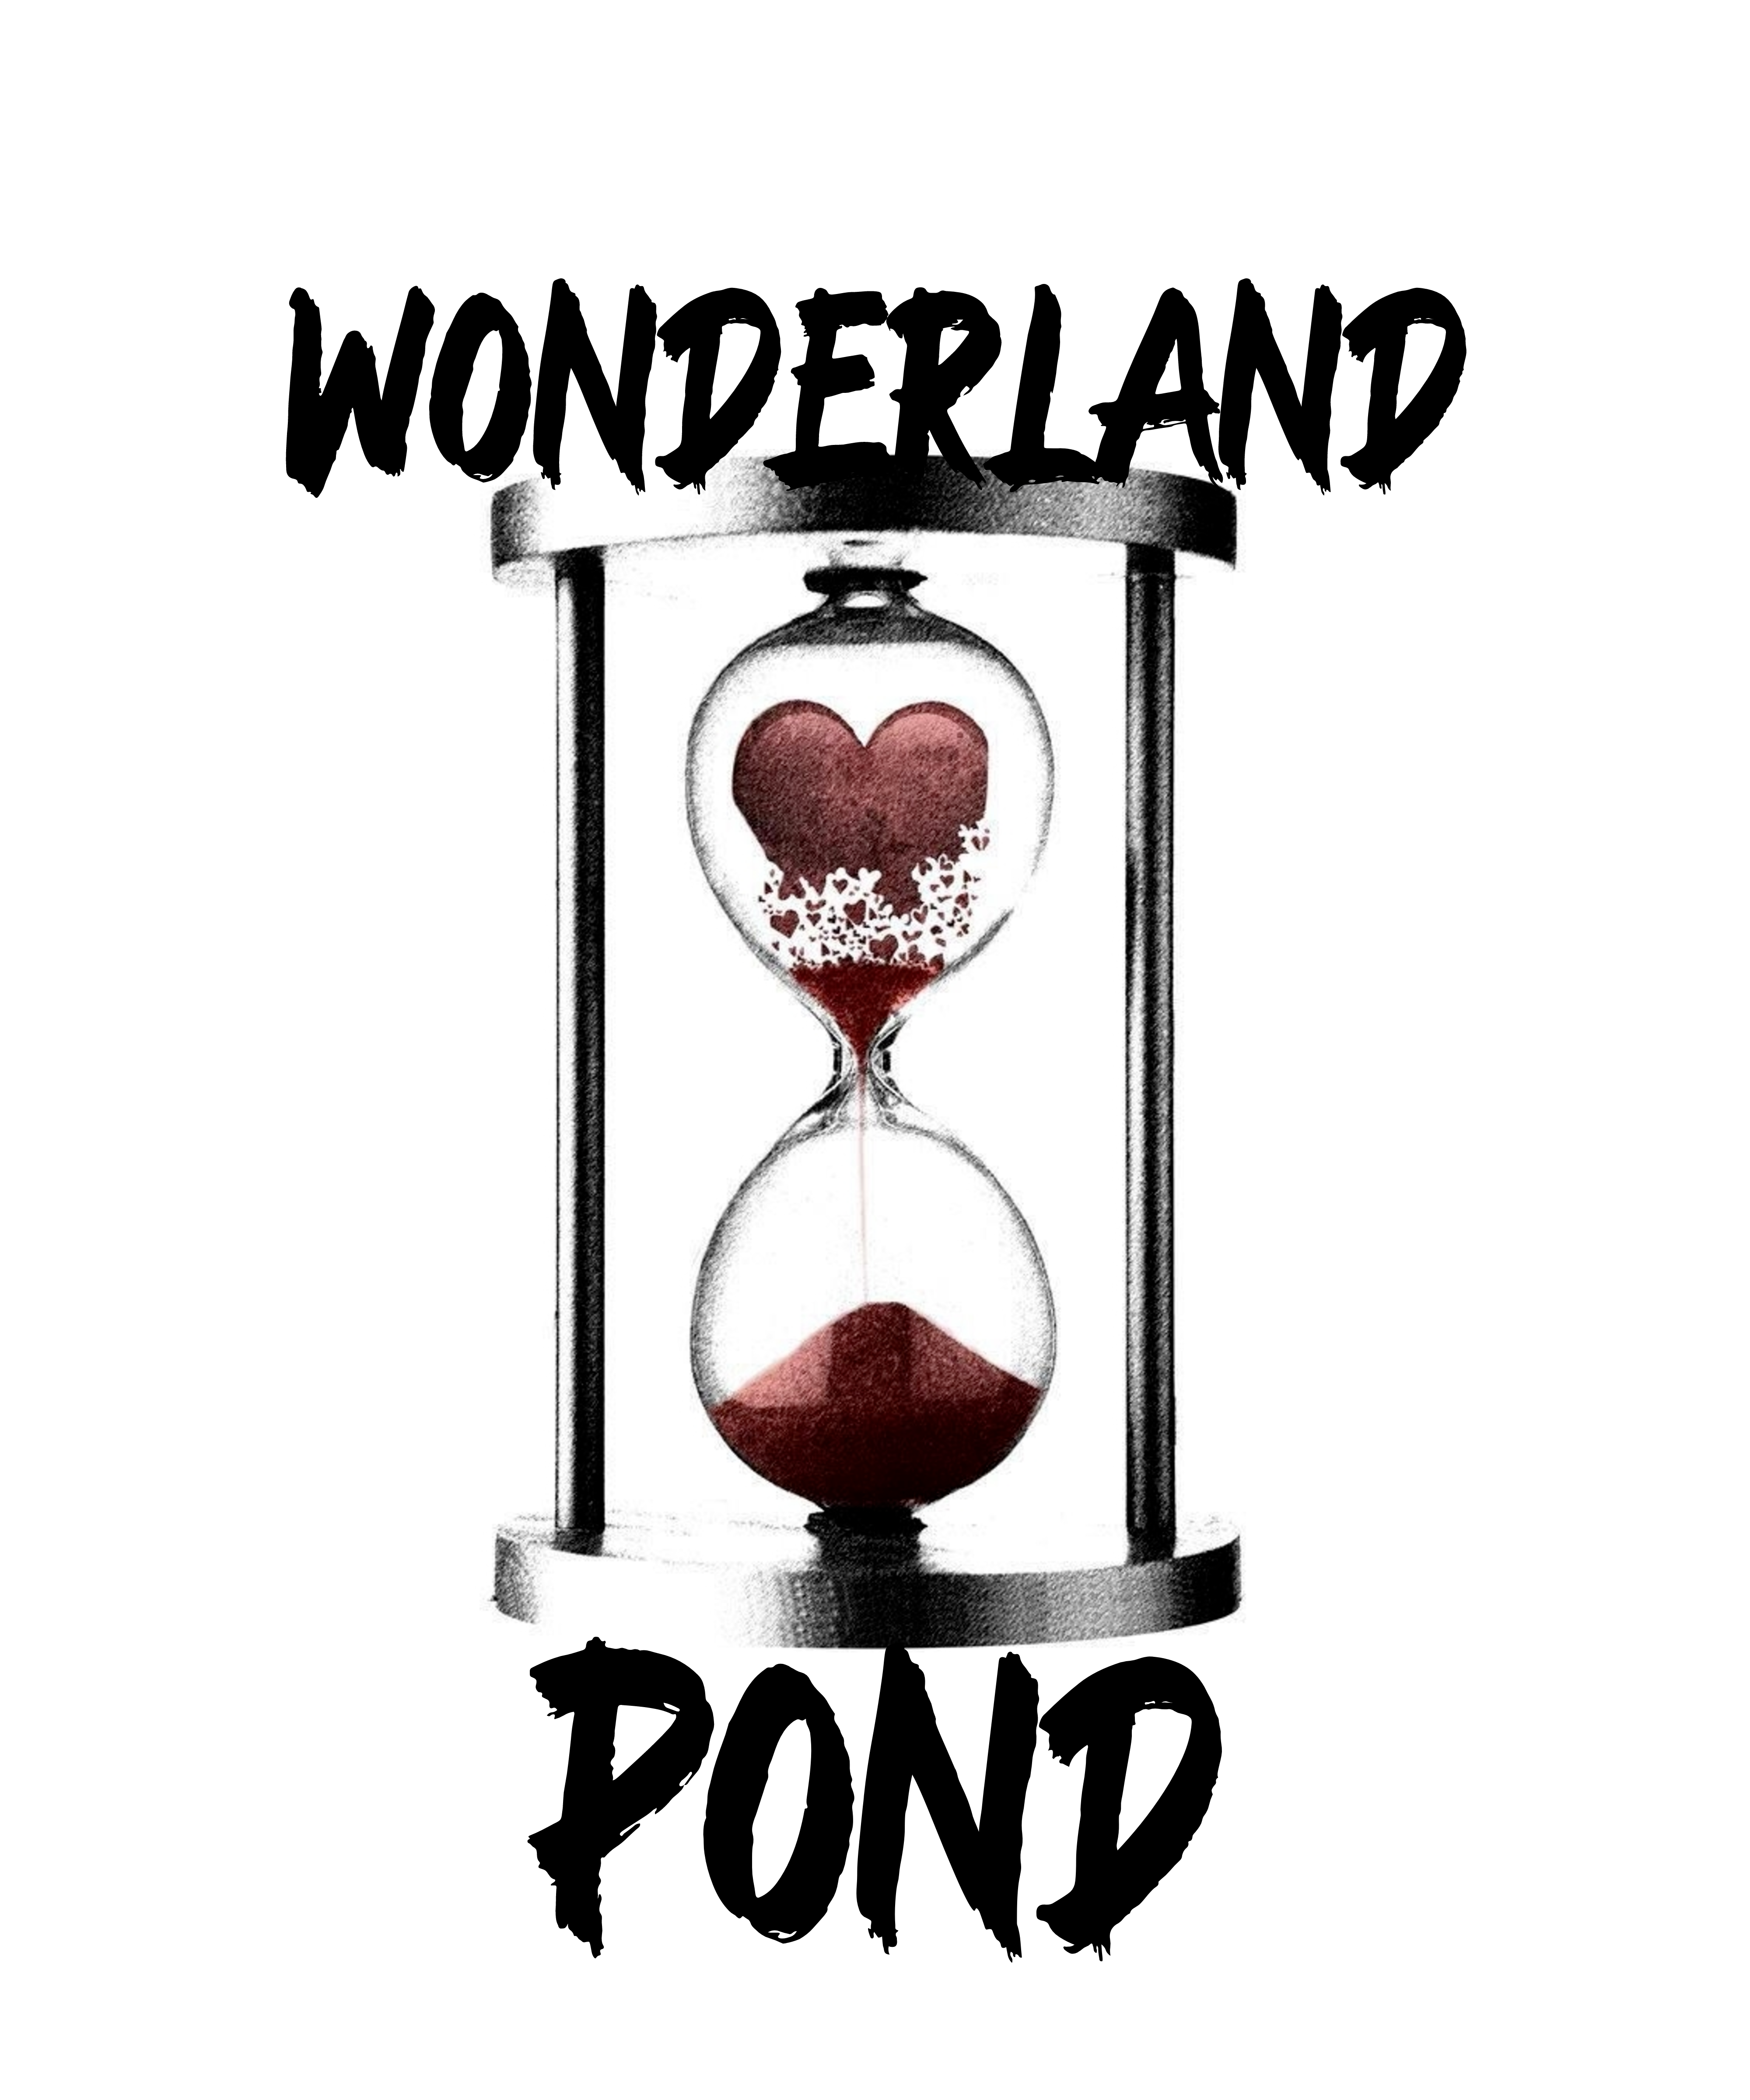 Wonderland Pond Apparel